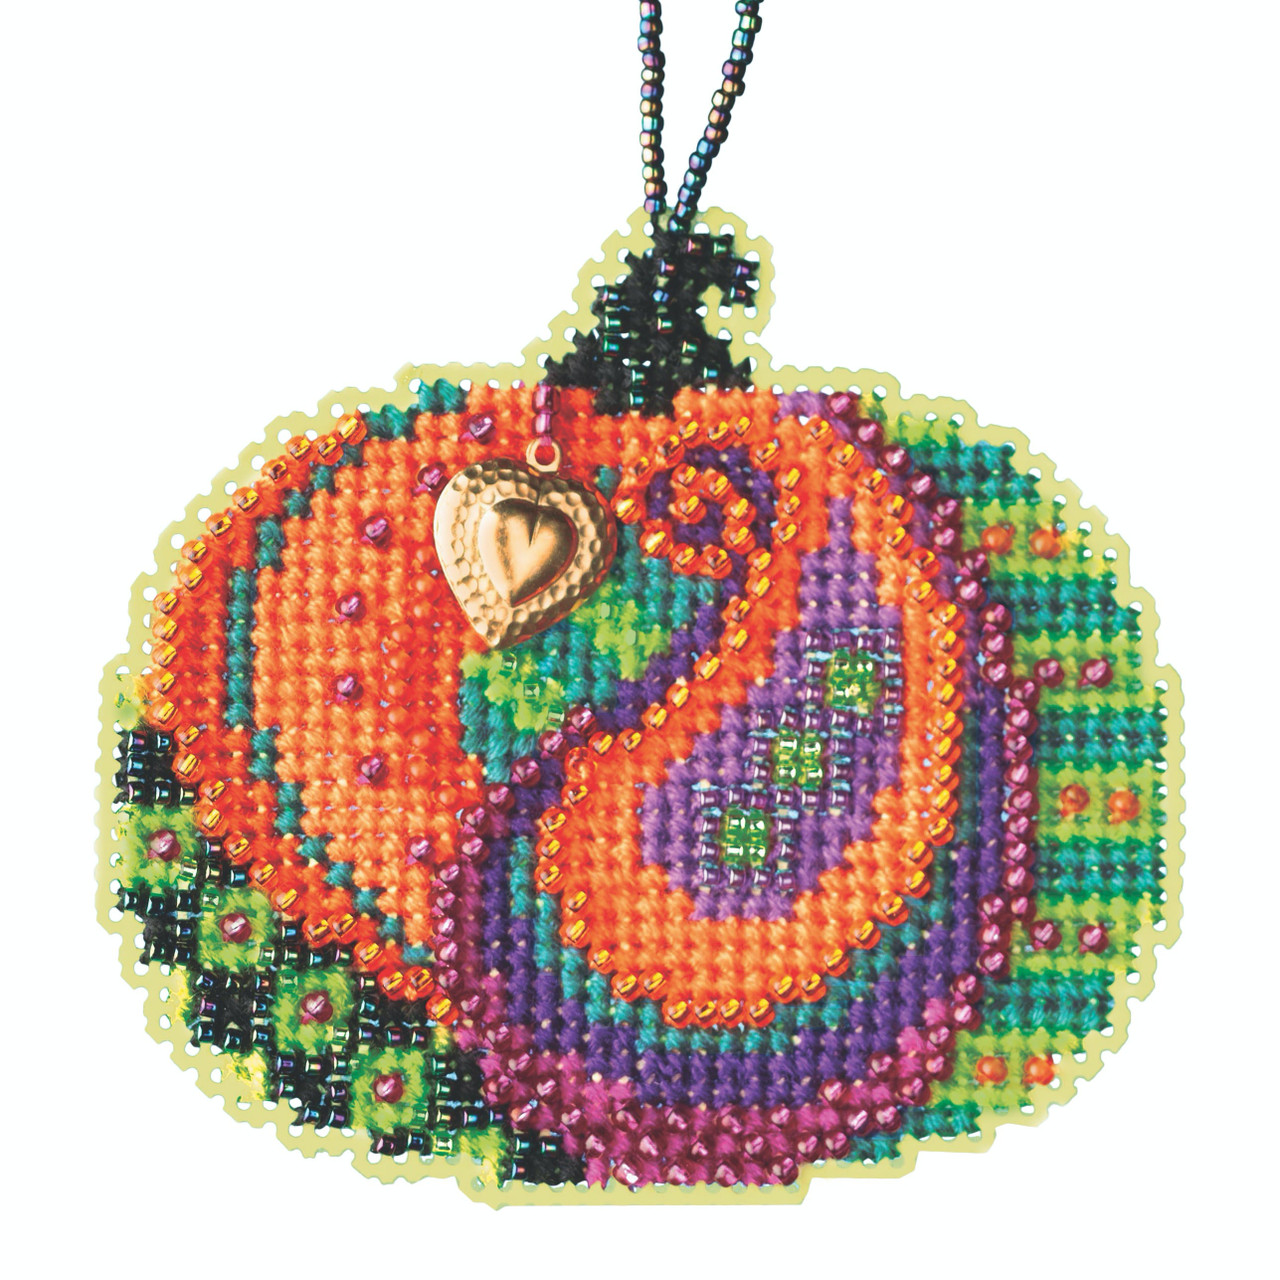 Persian Pumpkin Beaded Counted Cross Stitch Kit Mill Hill 2020 Ornament MH162026